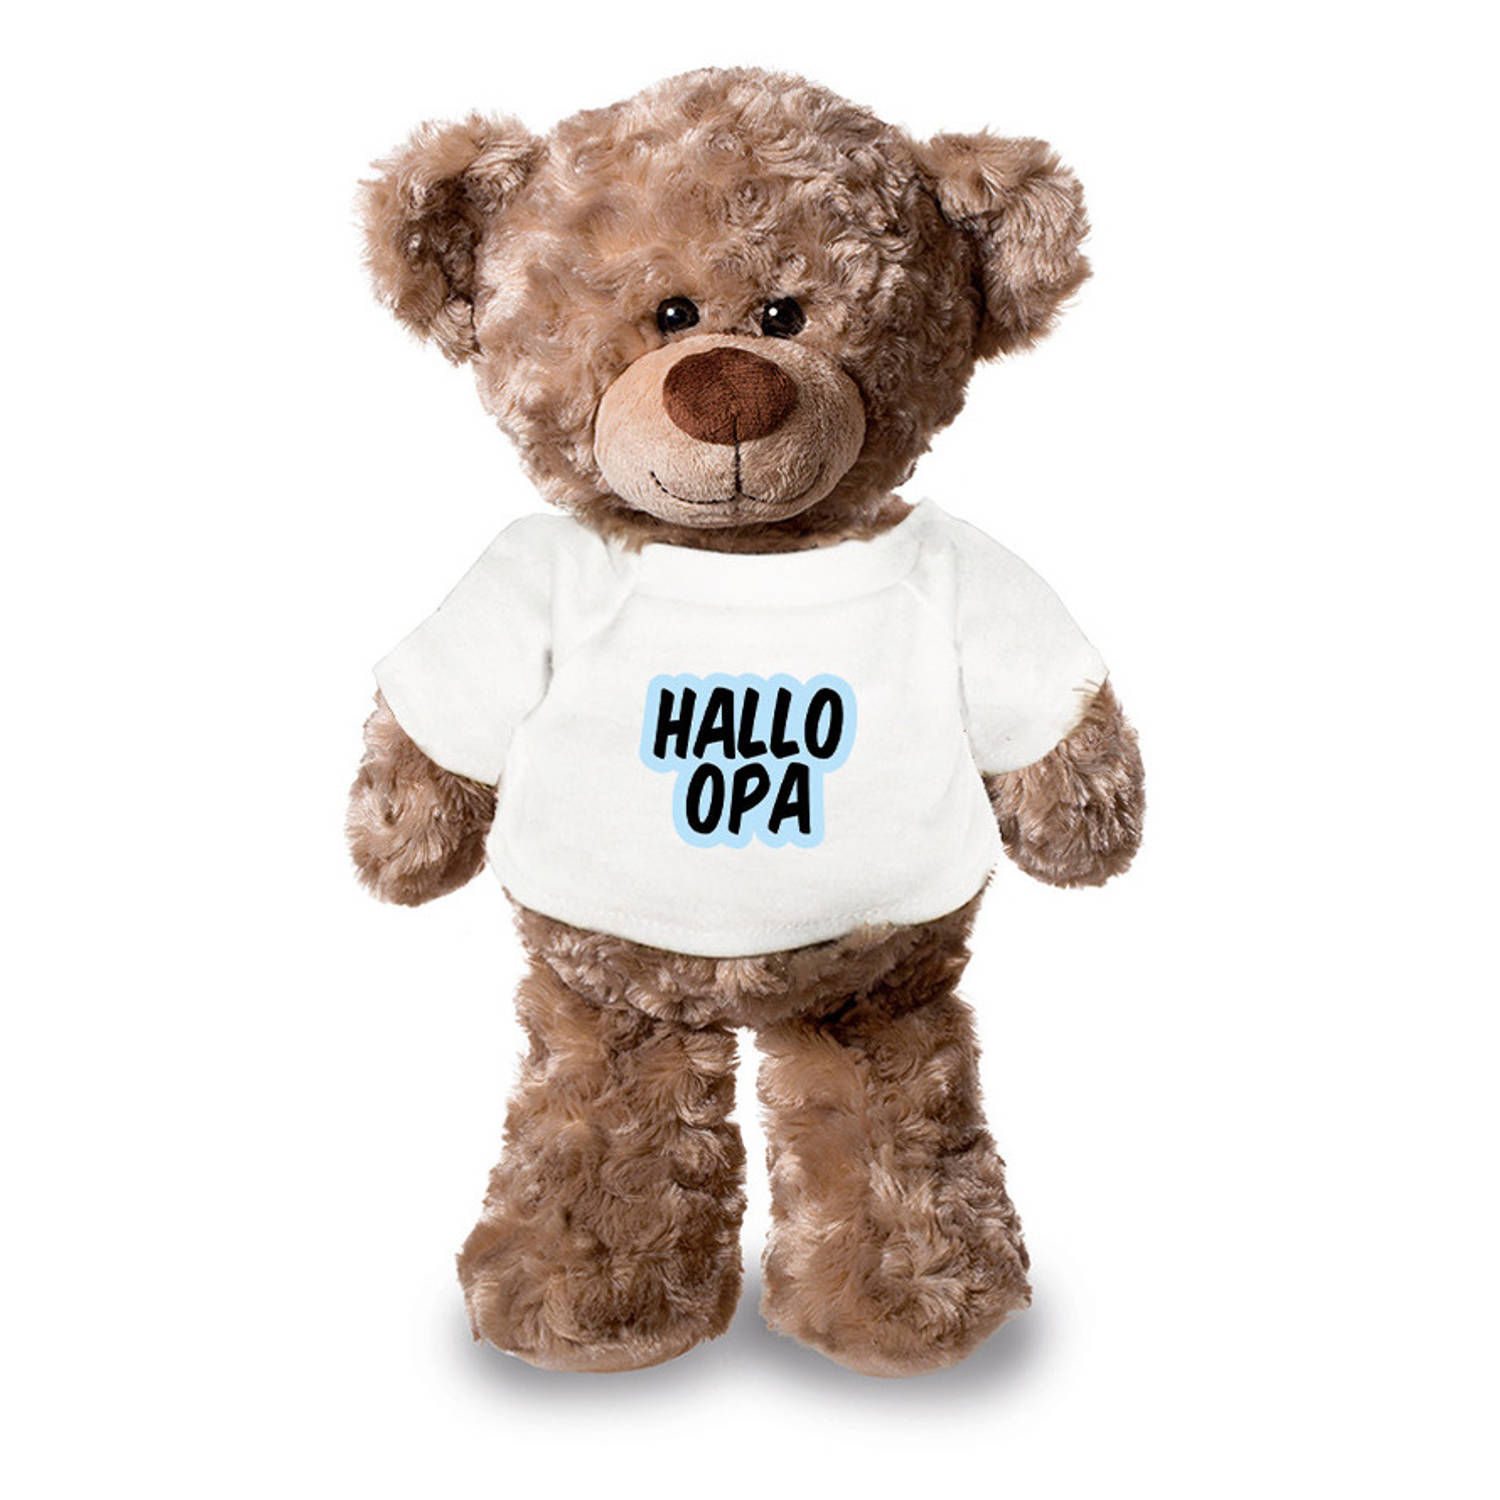 Hallo opa aankondiging jongen pluche teddybeer knuffel 24 cm Knuffeldier